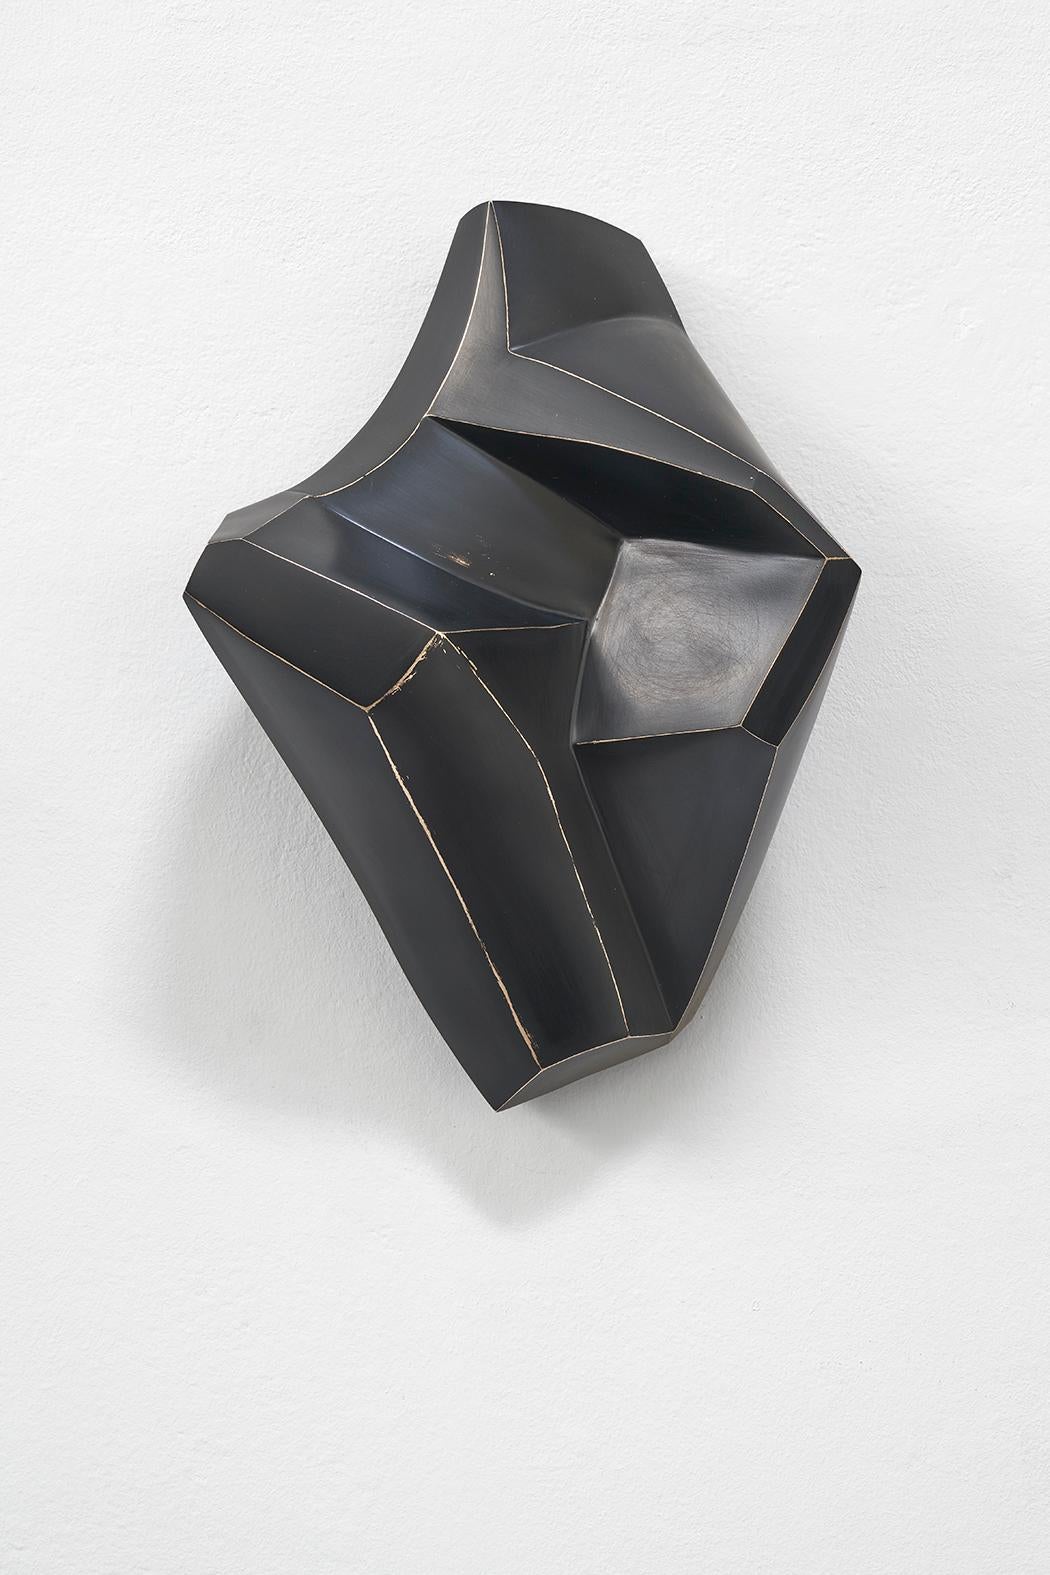 Sculptures 'Wandobjekt' by Carola Eggeling, Bronze and Aluminum For Sale 5